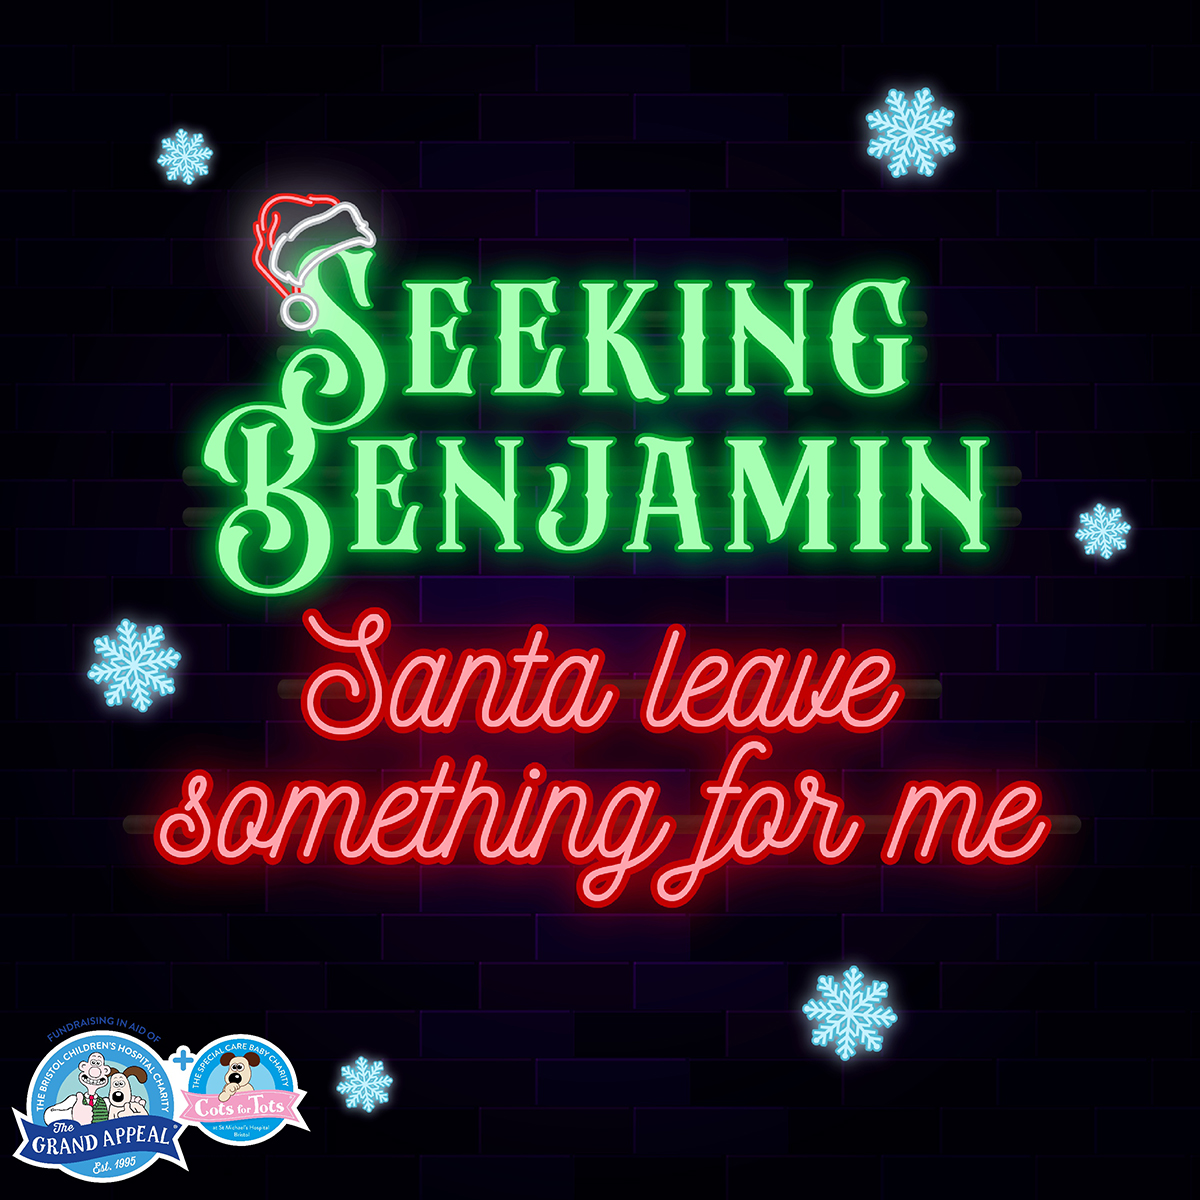 03 - Seeking Benjamin - Santa Leave Something For Me artwork-RingMasterReview